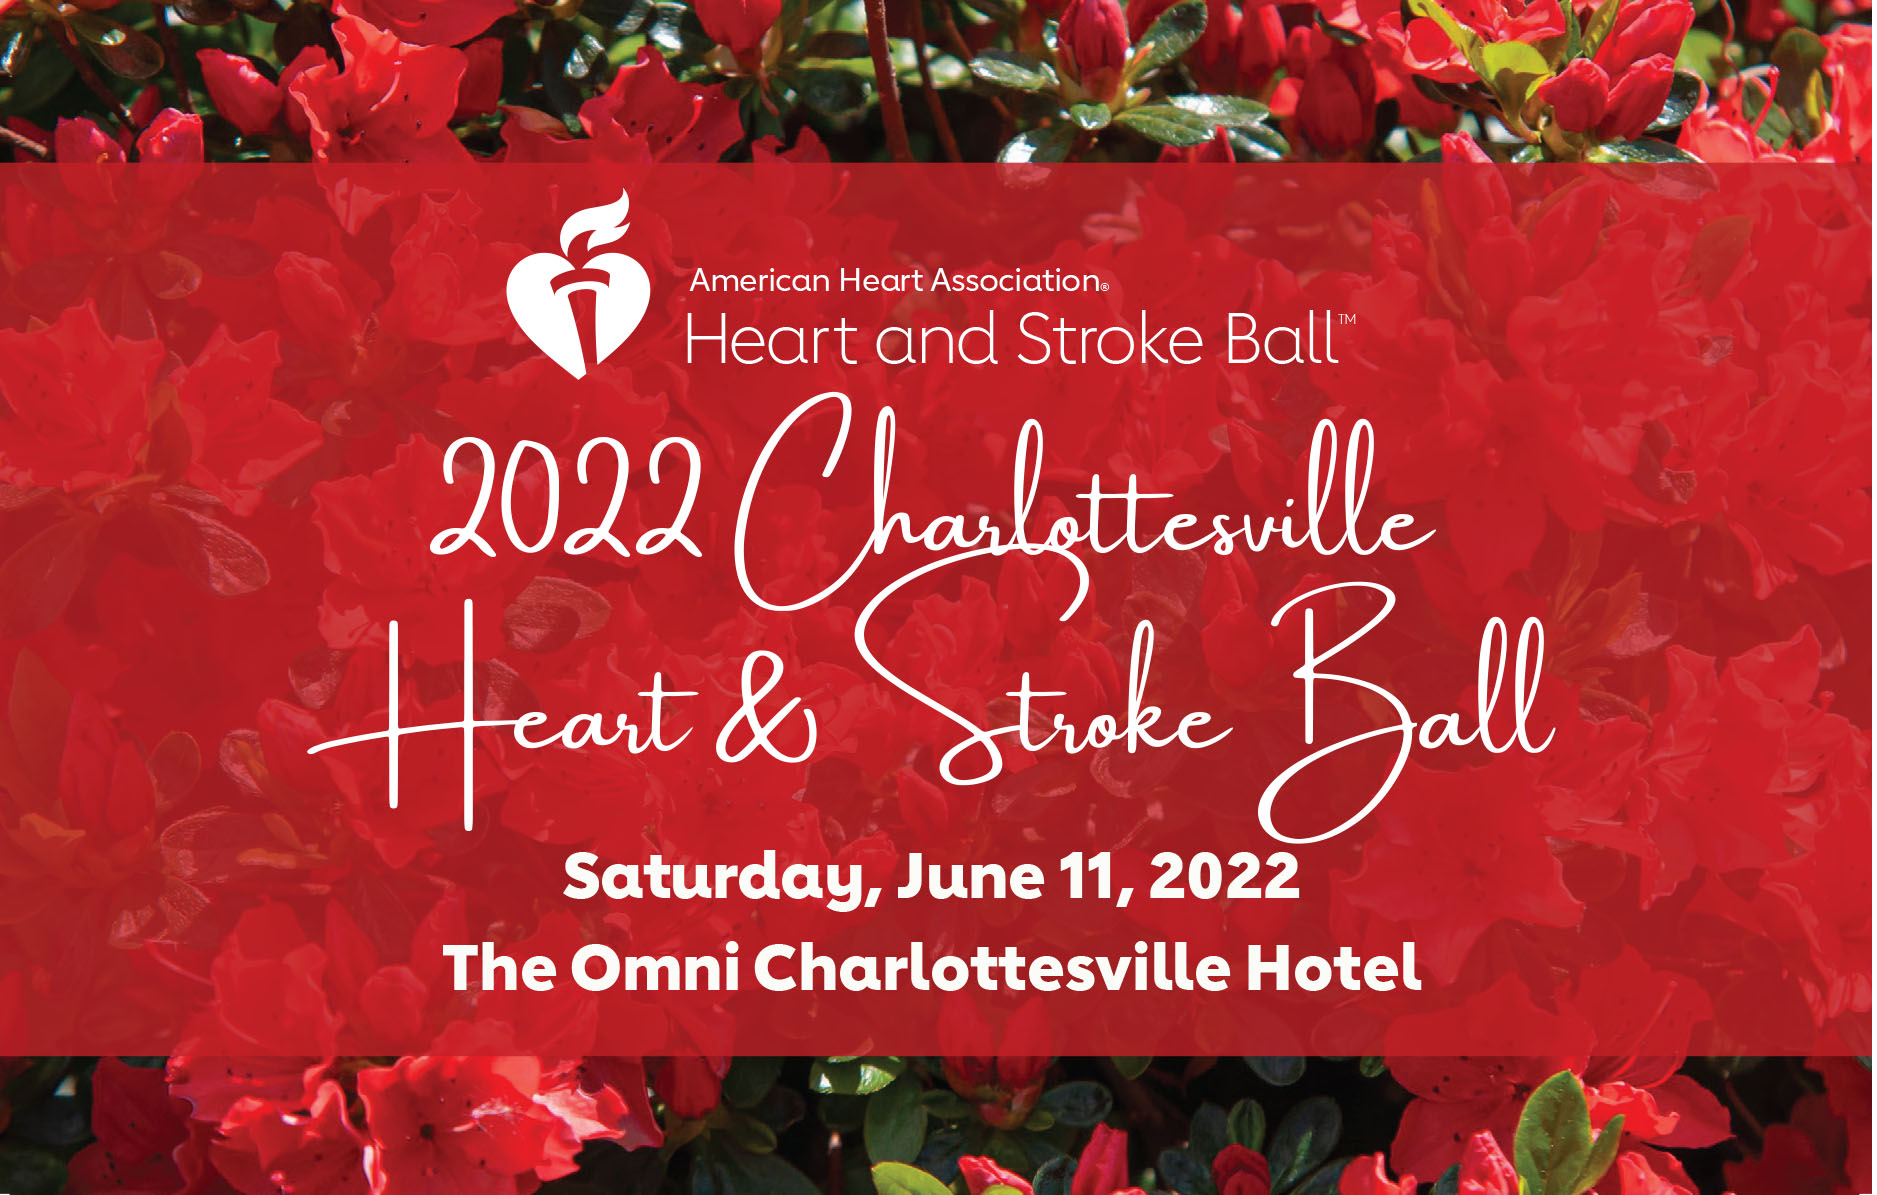 Charlottesville Heart & Stroke Ball on Saturday, June 11th.